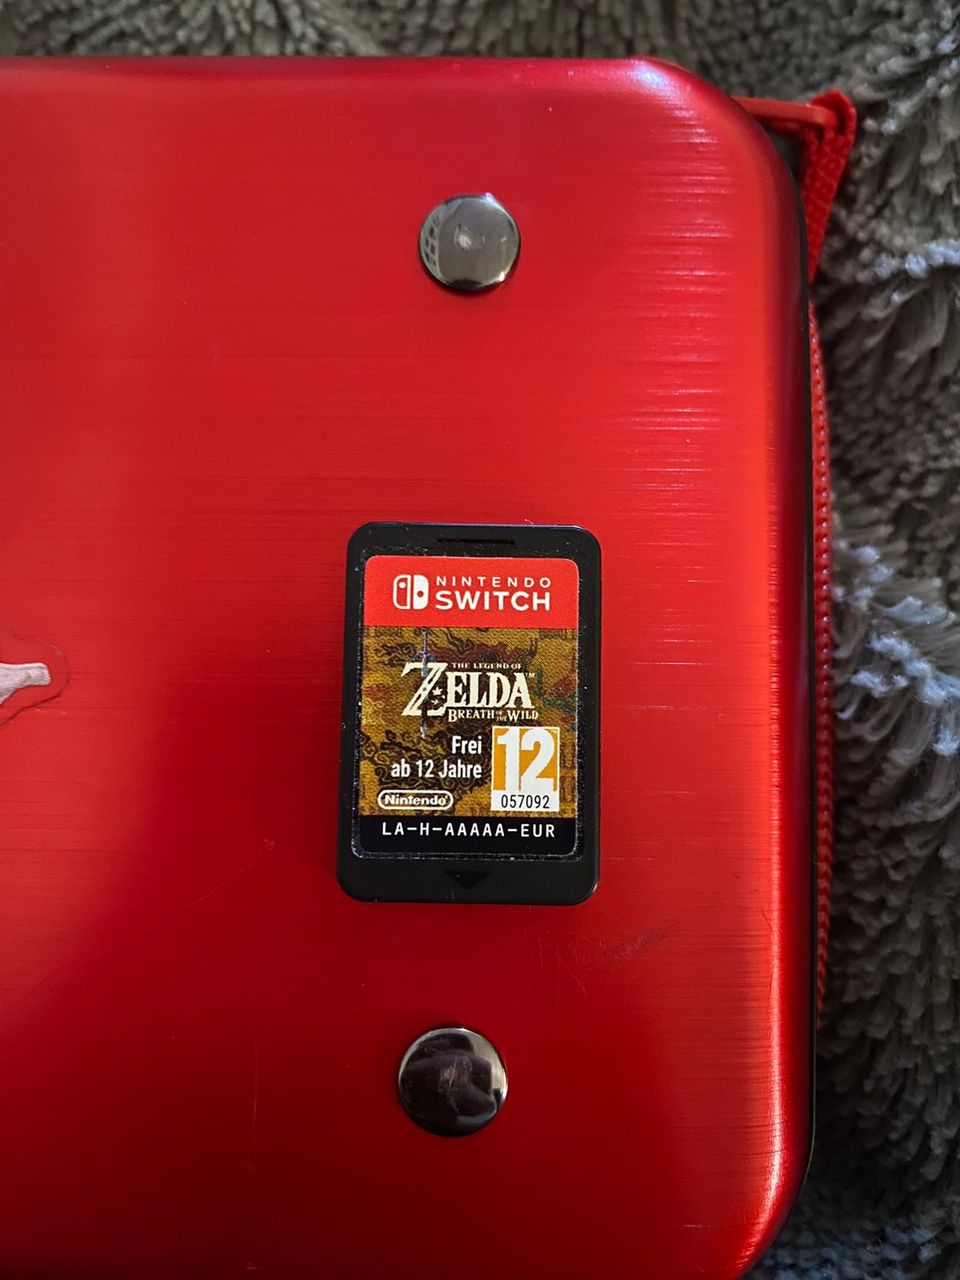 Nintendo Switch Zelda breath of the wild